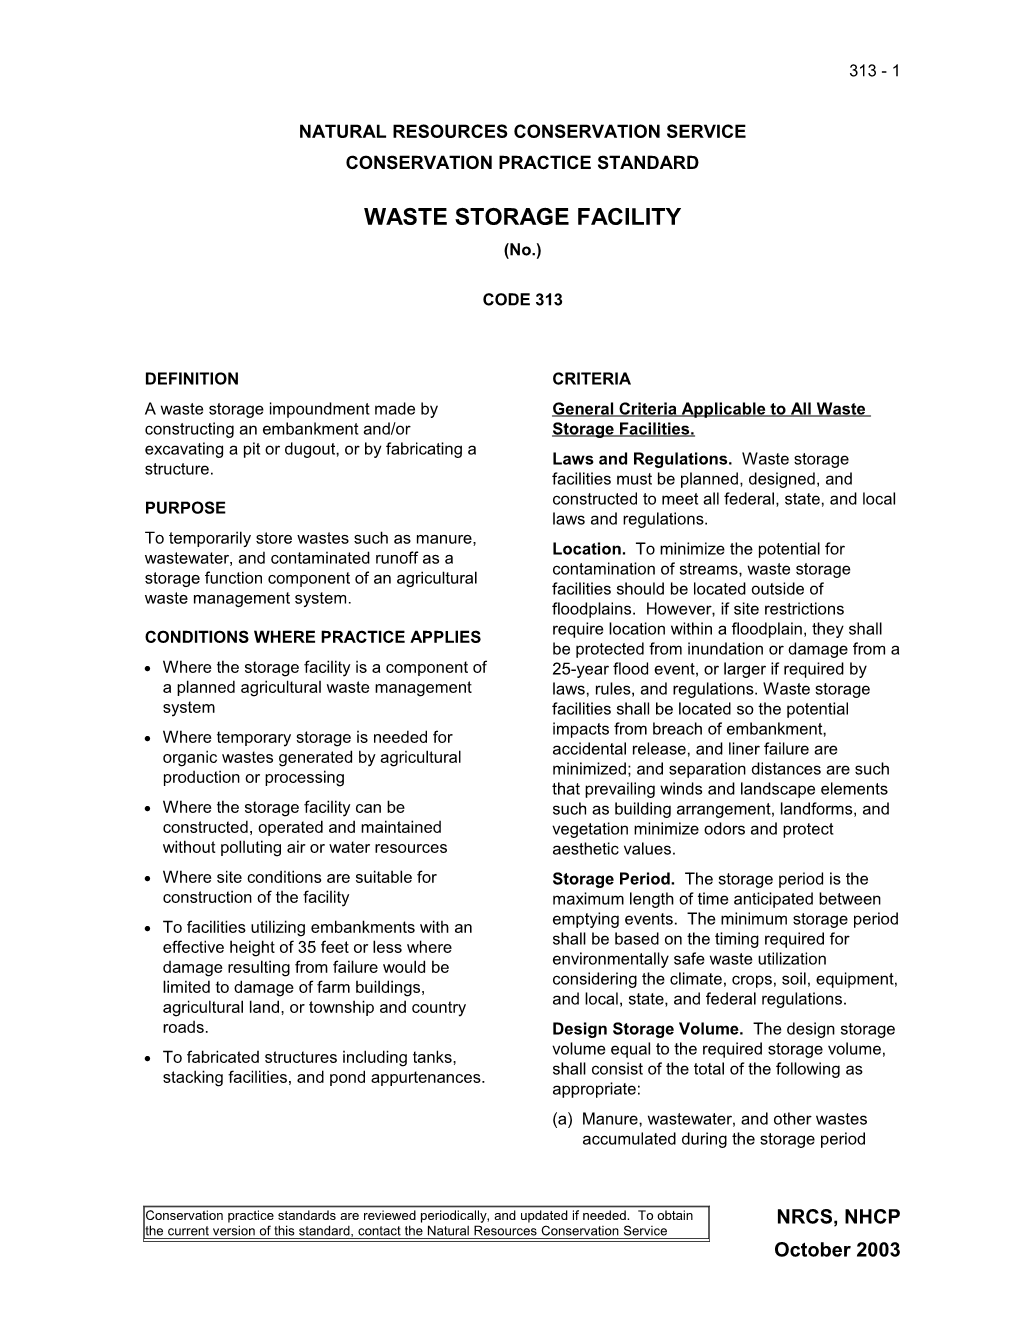 Waste Storage Facility Code 313